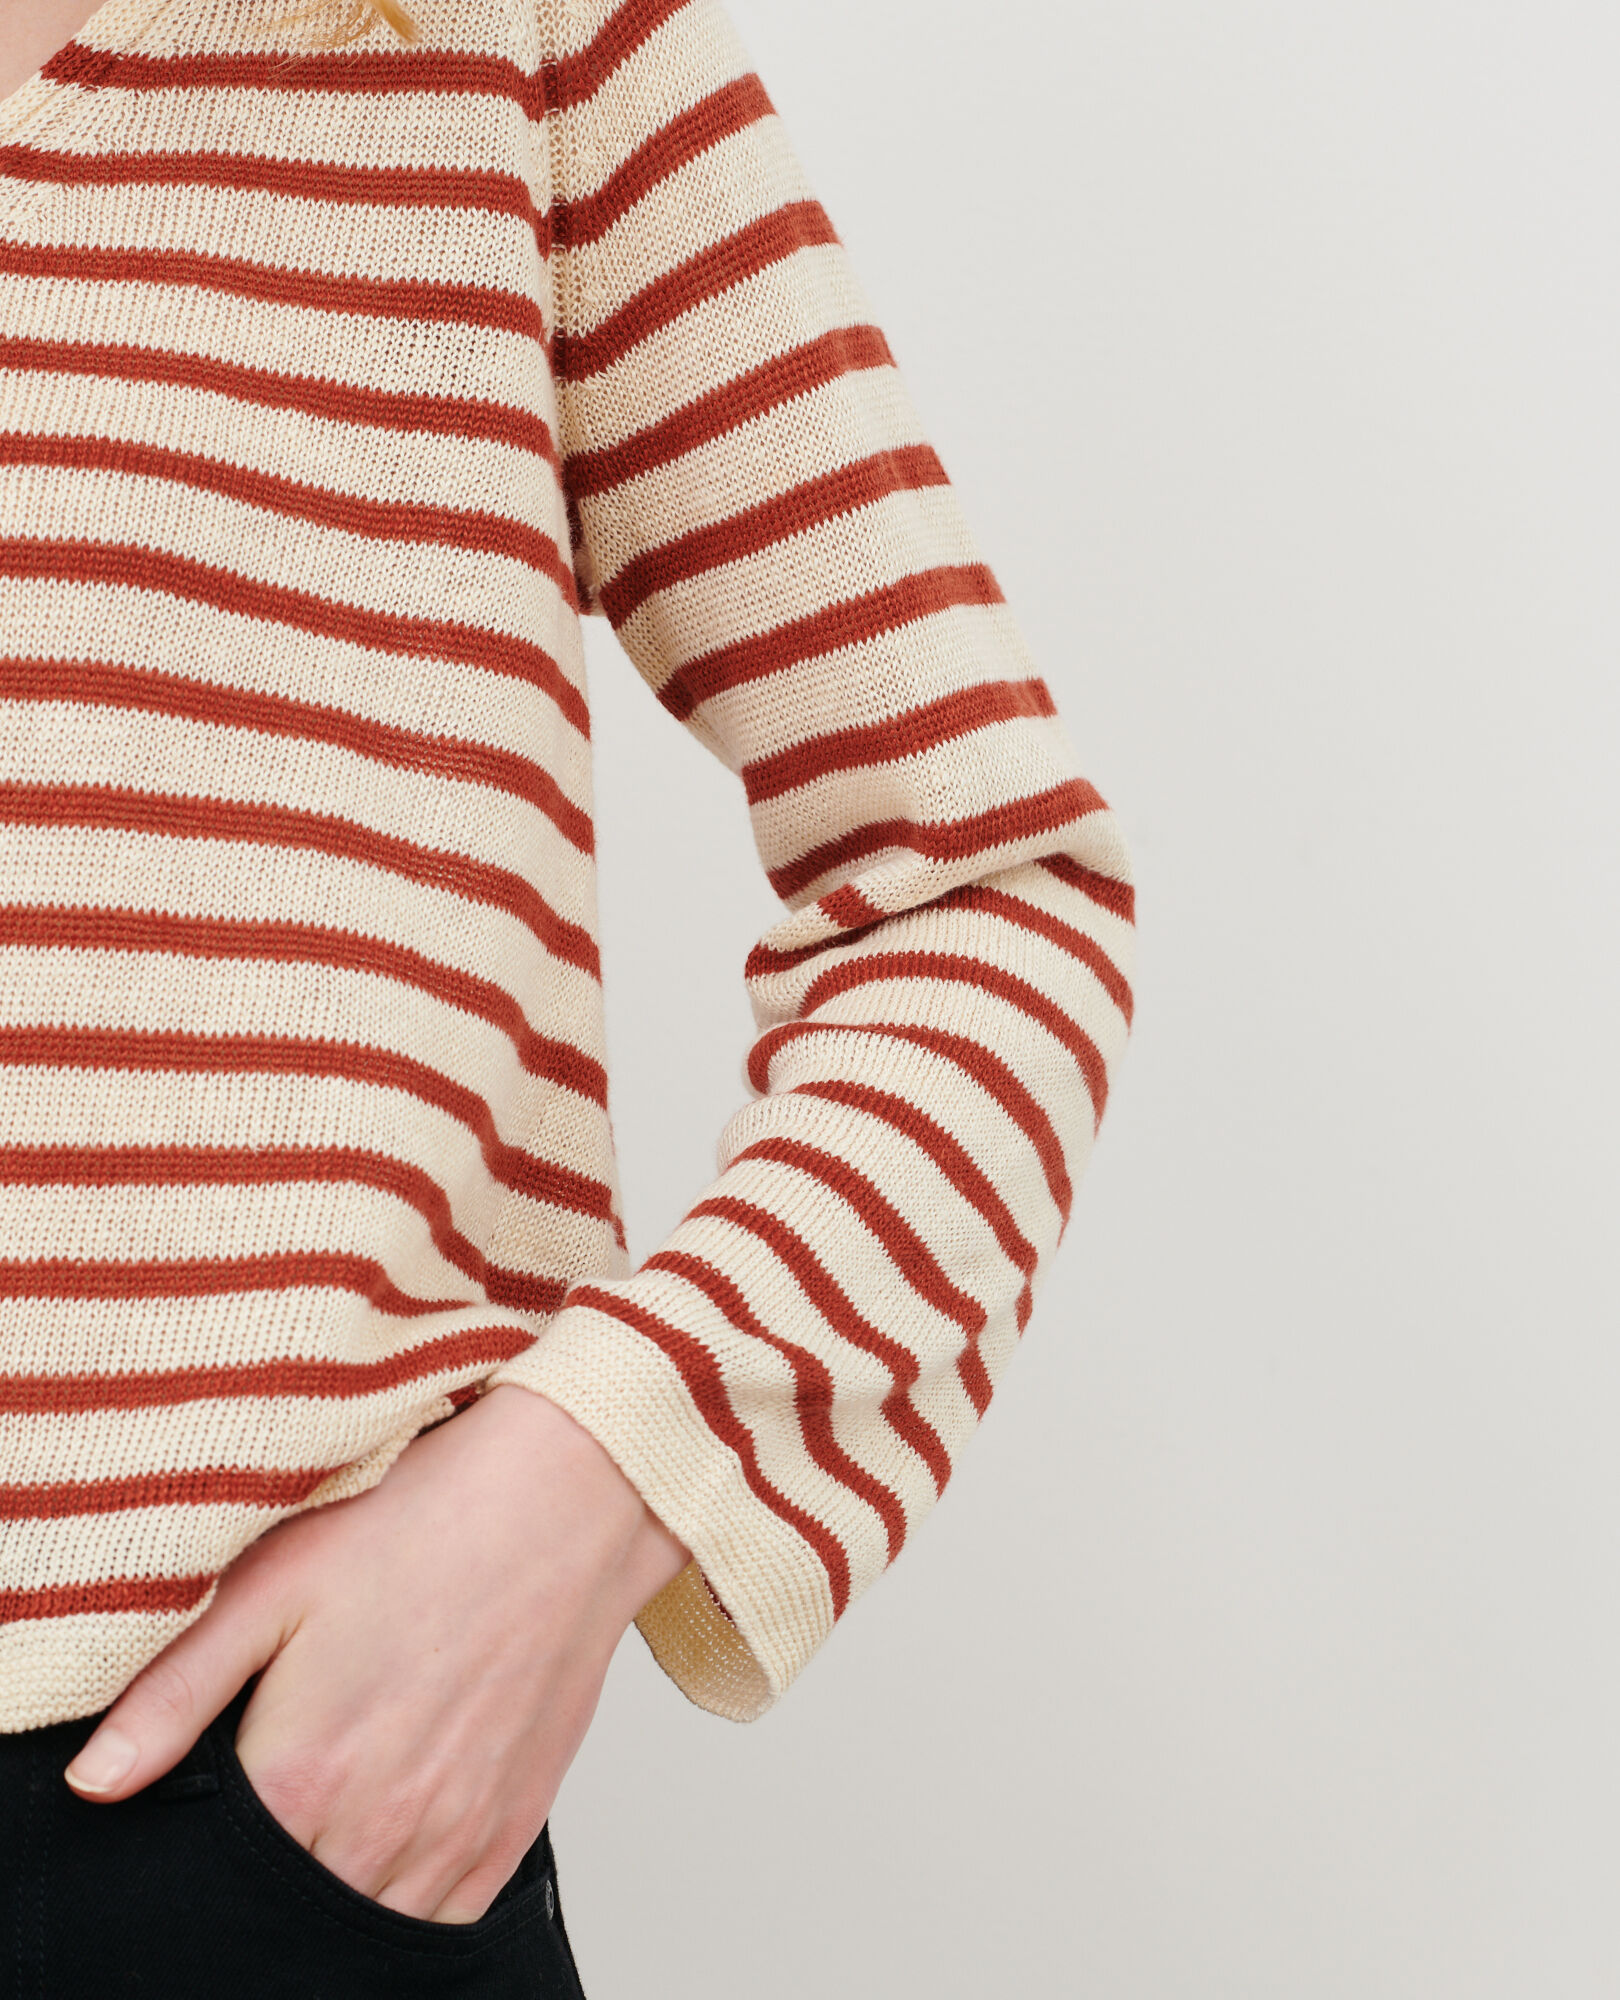 Jersey rayado de lino 116 stripe red Logron